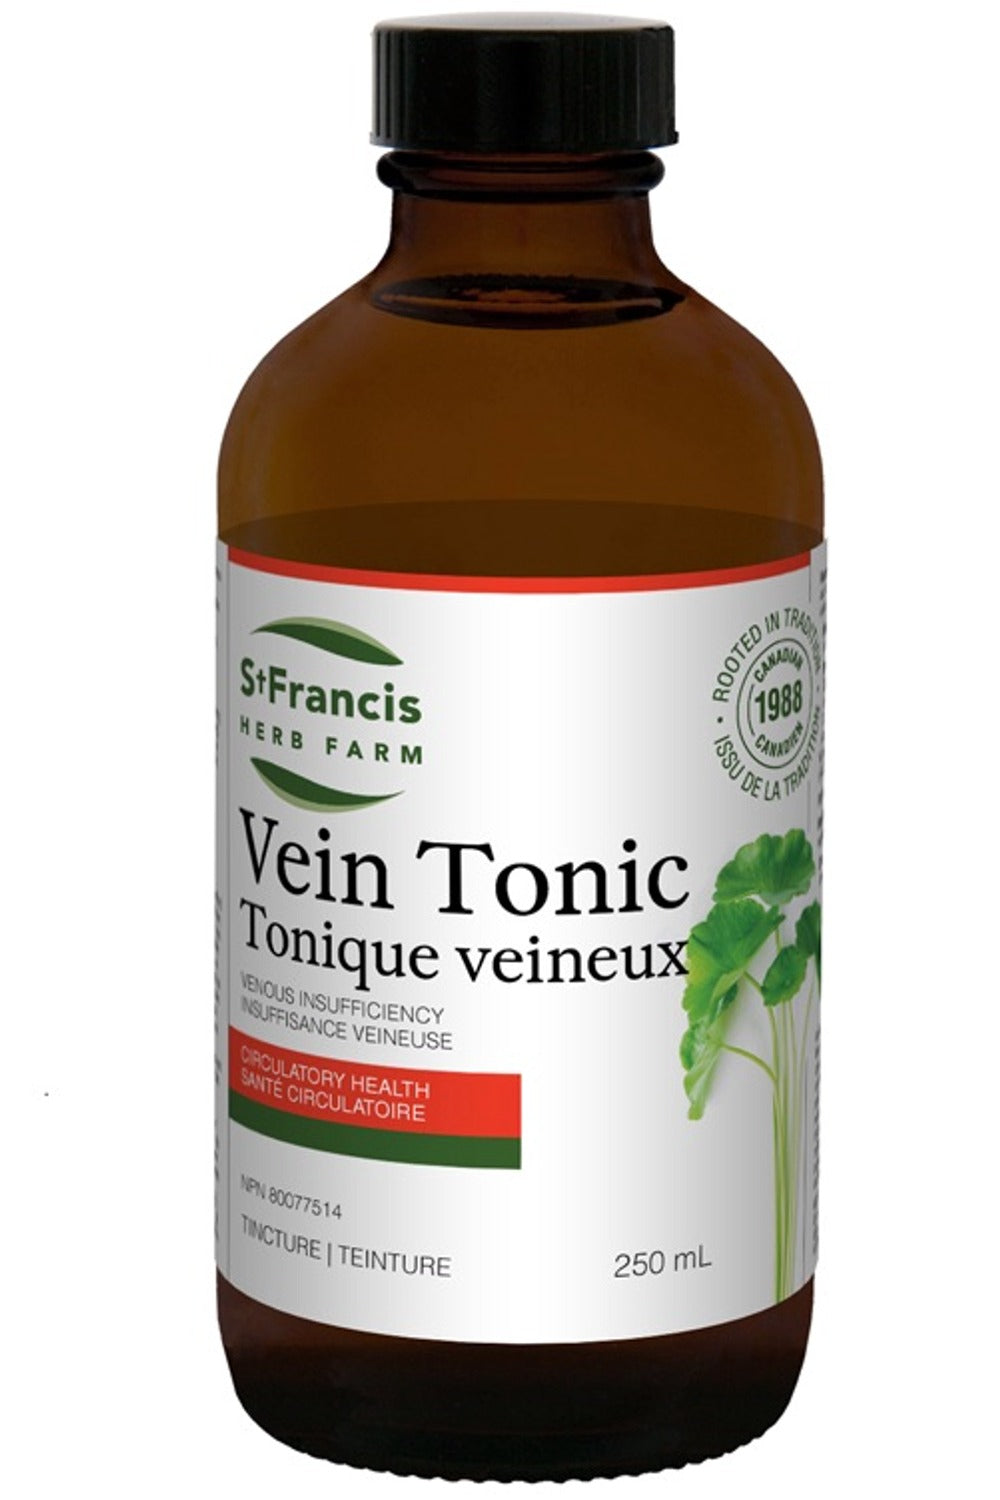 ST FRANCIS HERB FARM Vein Tonic (250 ml)